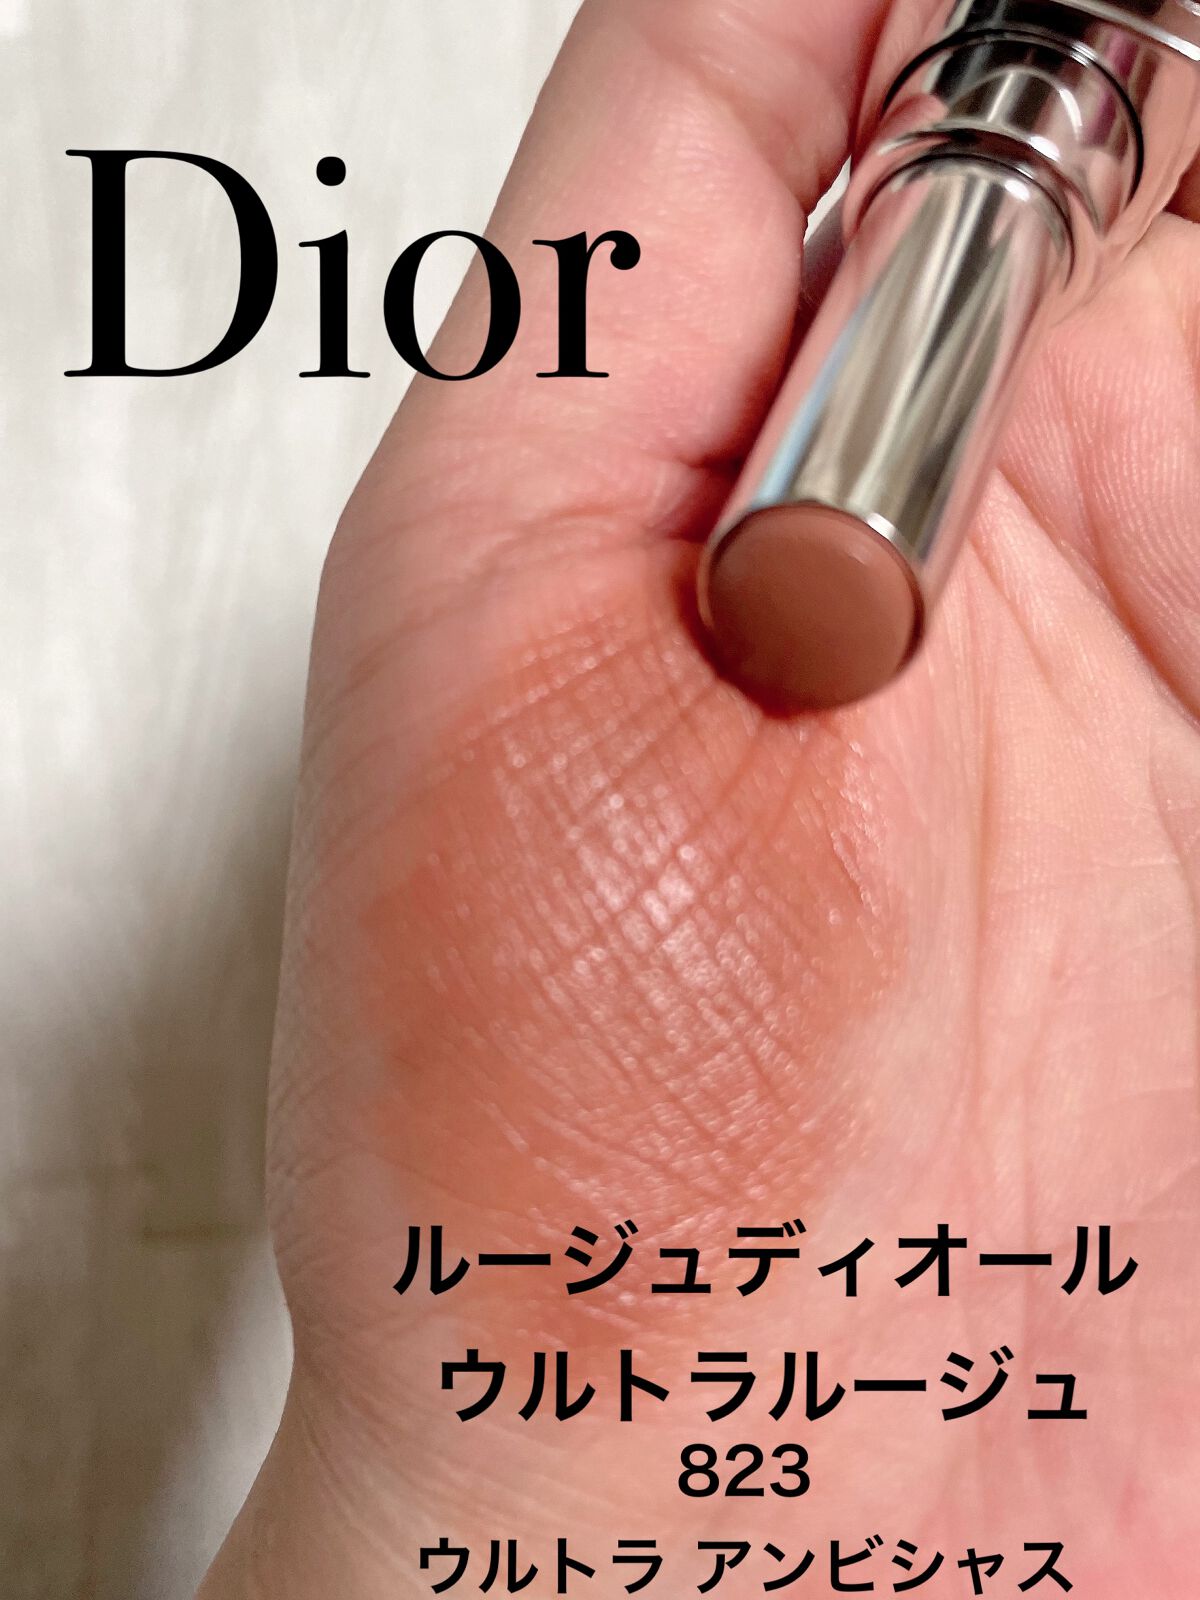 Diorの口紅 ルージュ ディオール ウルトラ ルージュ他、4商品を使った 